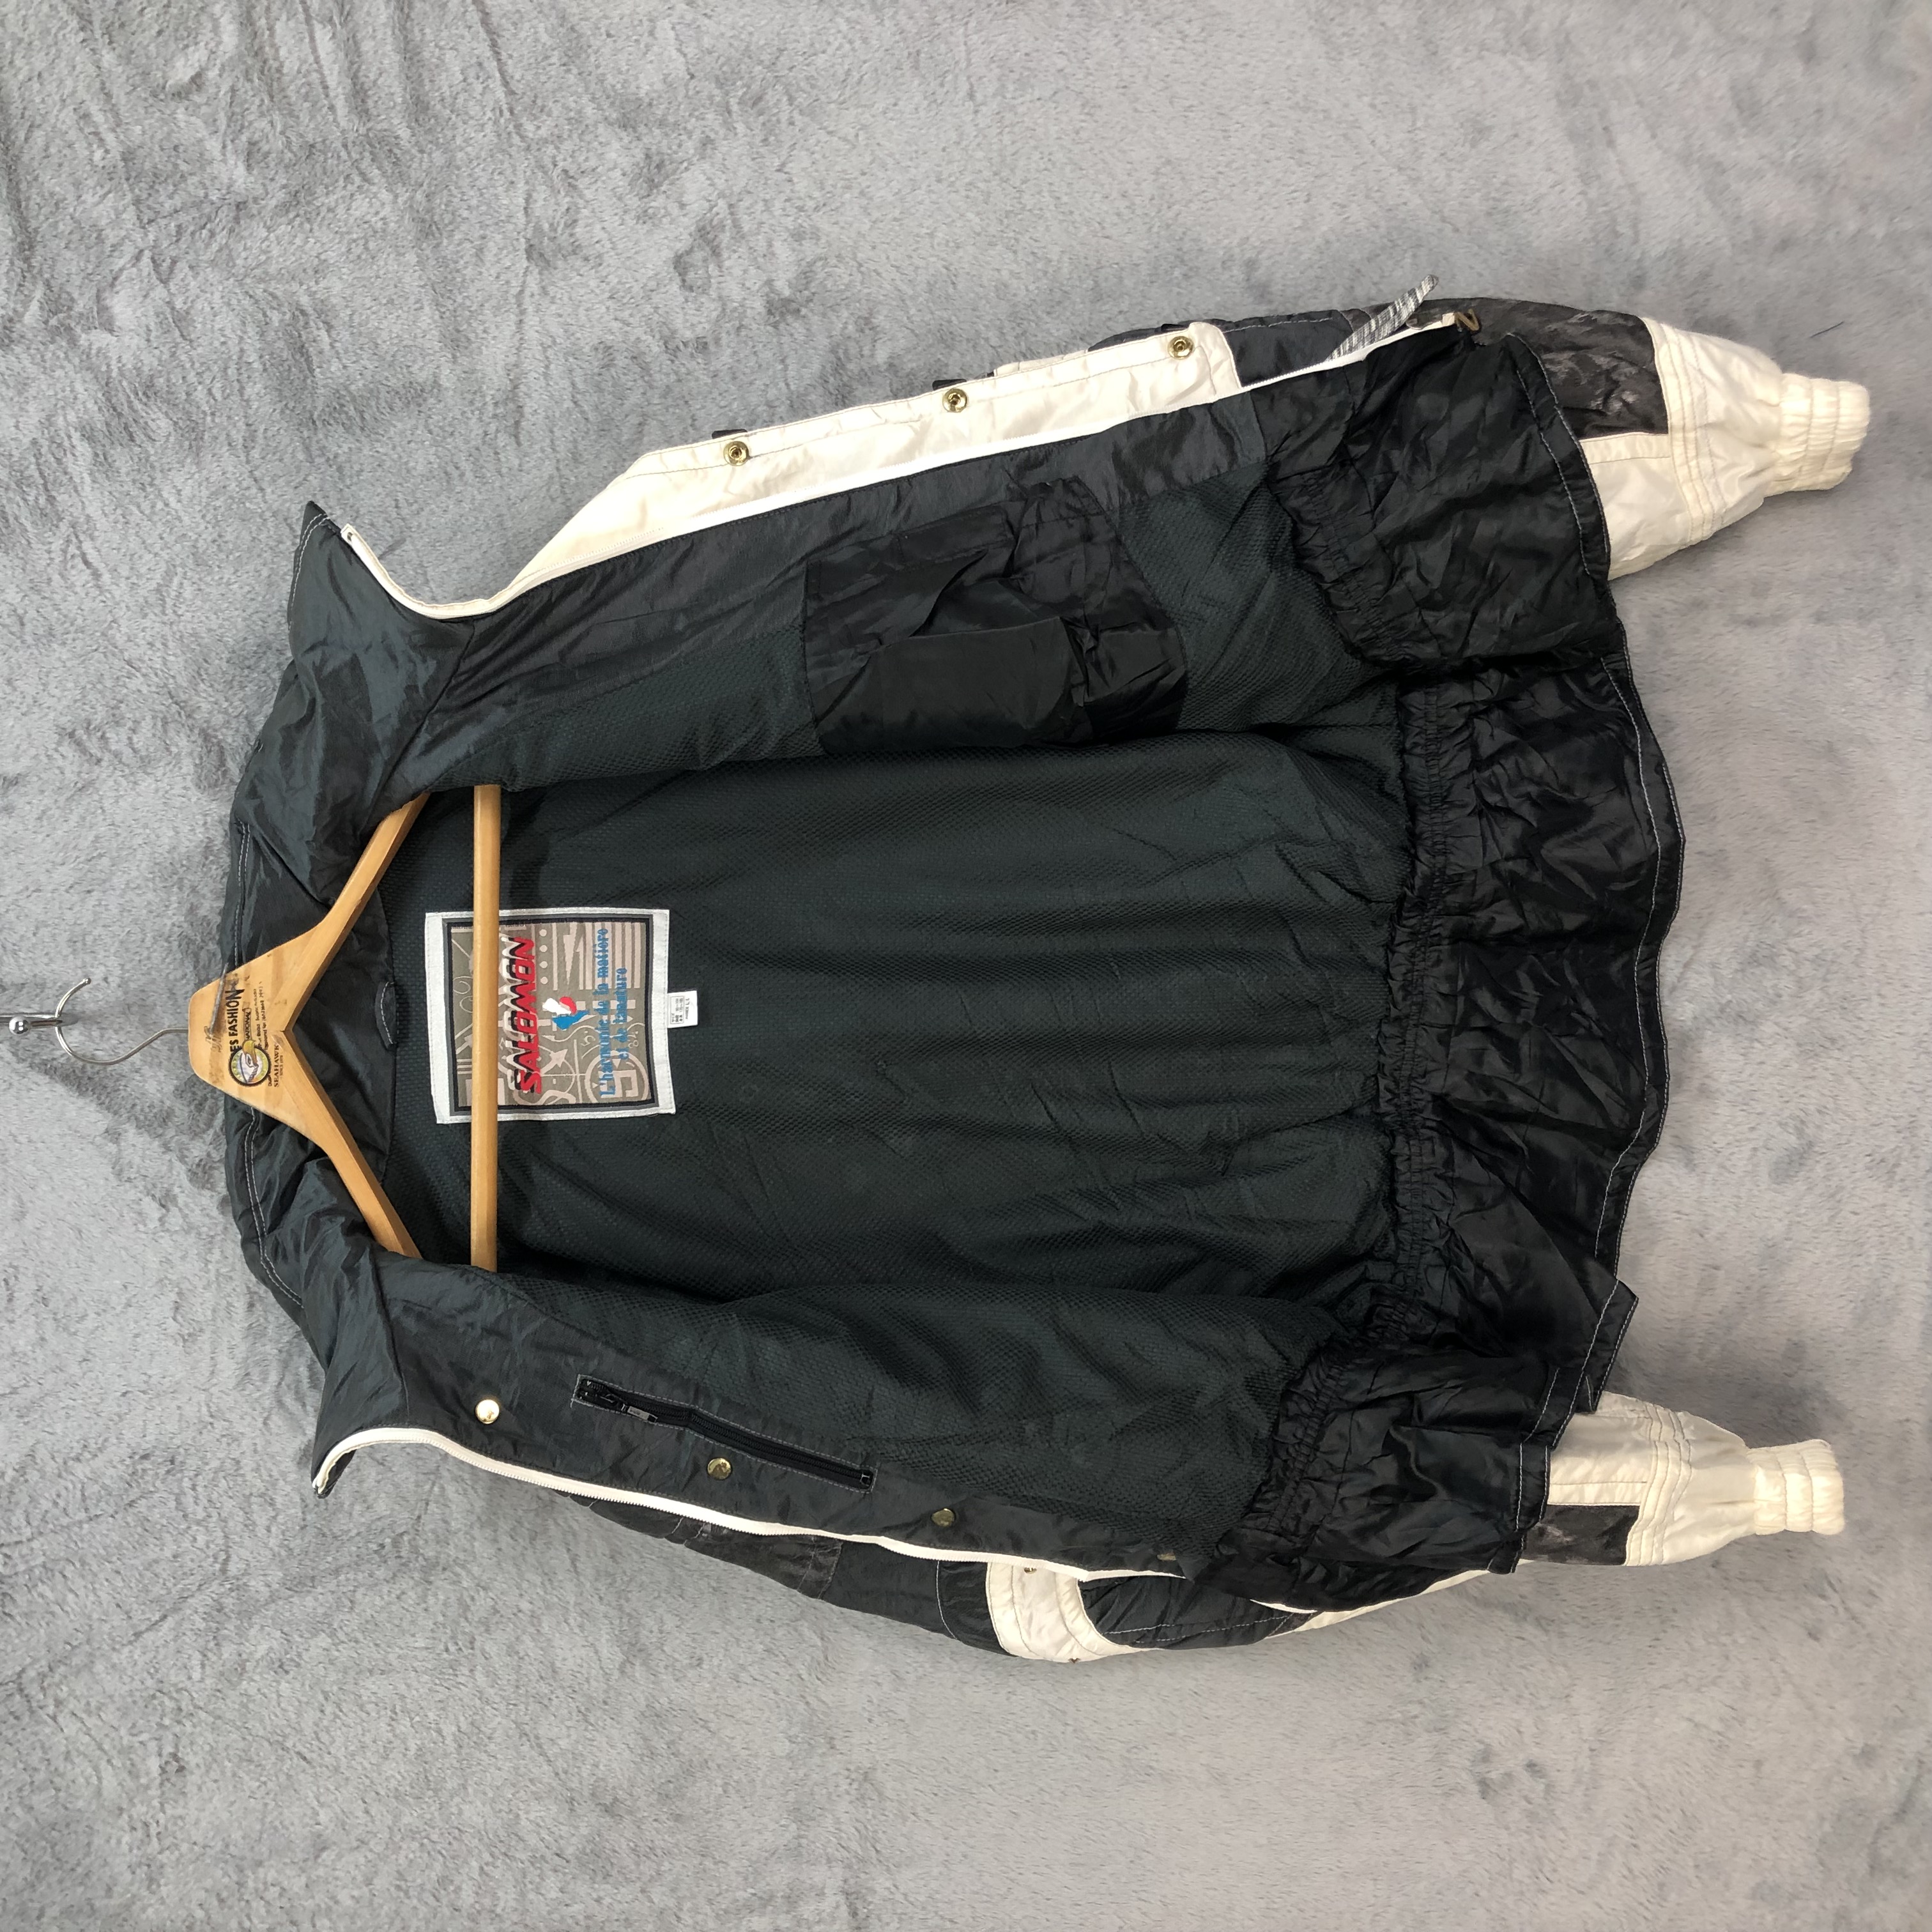 SALOMON Hooded Ski Jacket Skiwear #5164-177 - 11